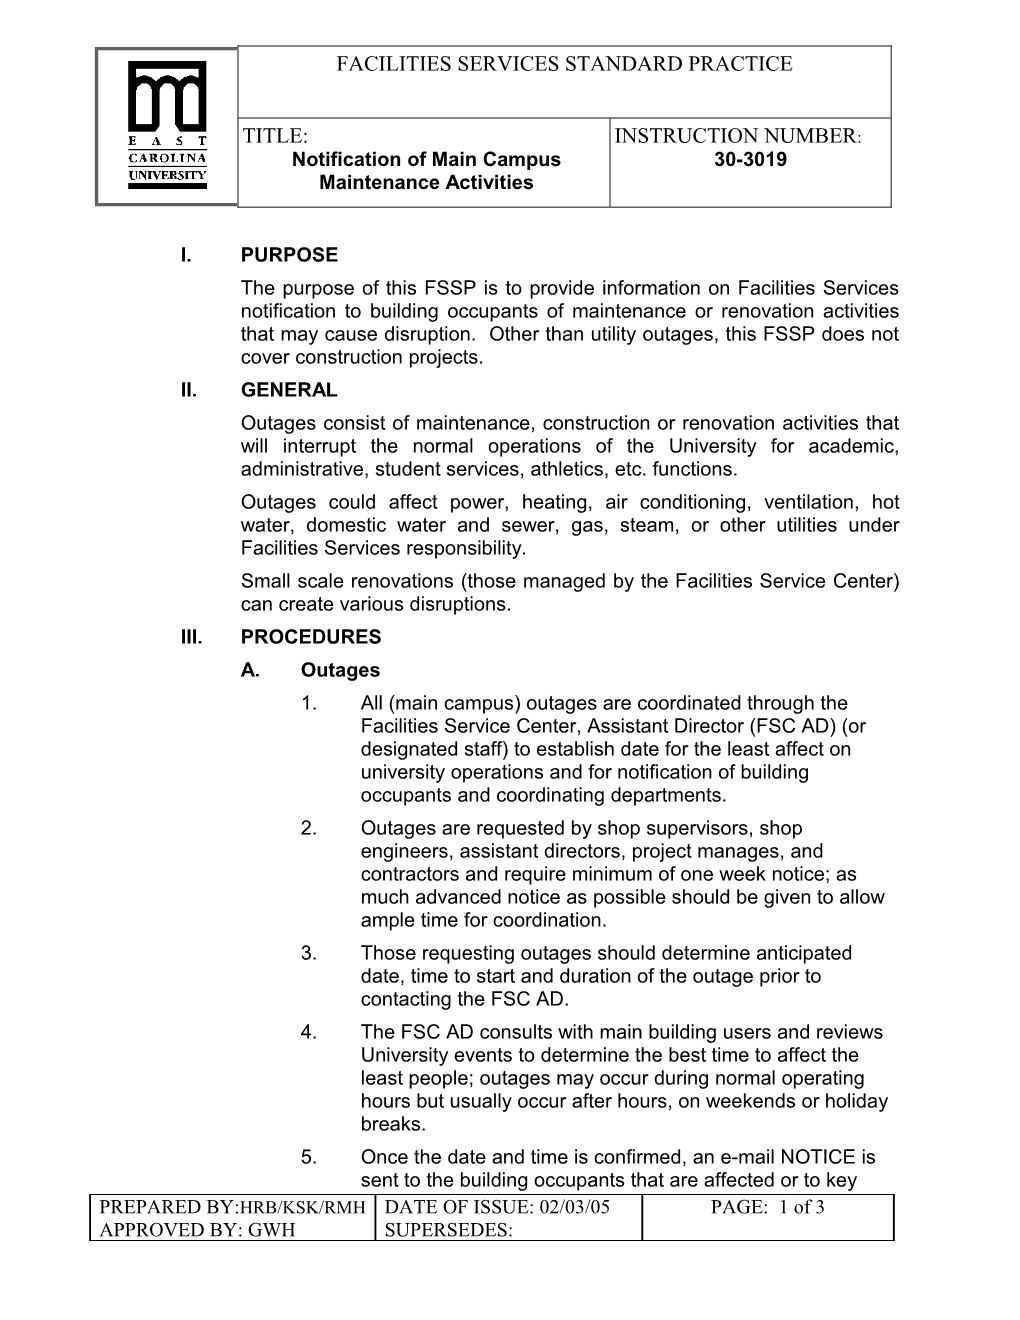 FSSP 30-3019; Notification of Main Campus Maintenance Activities